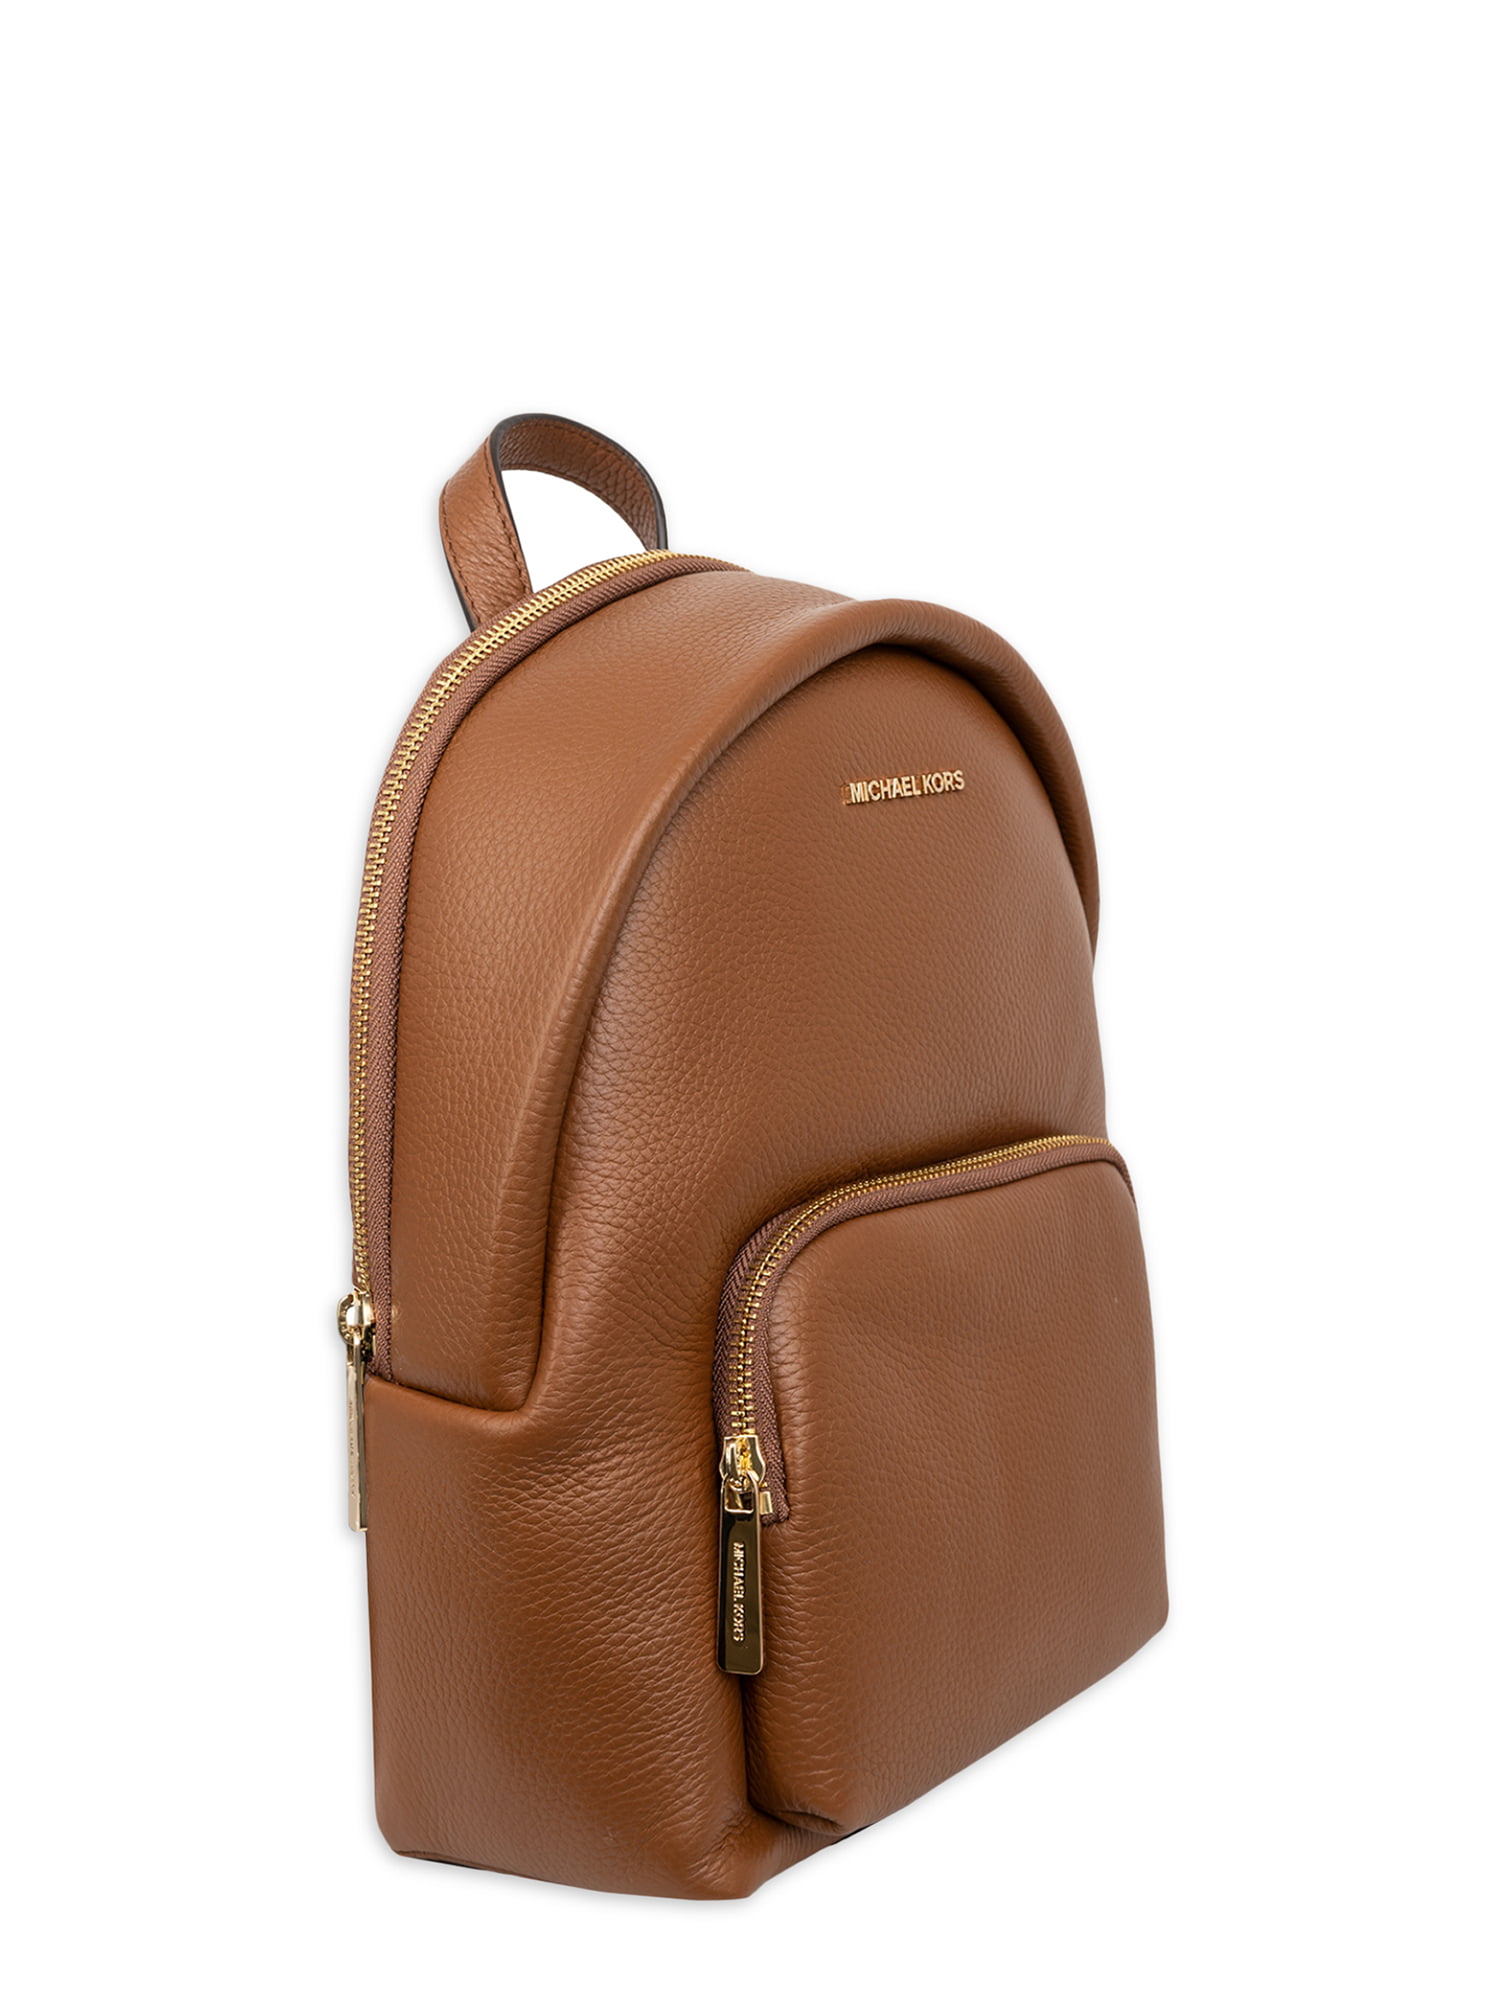 Women’s Michael Kors Medium Backpack. Pebbled Leather. JESSA Luggage Color.  EUC.